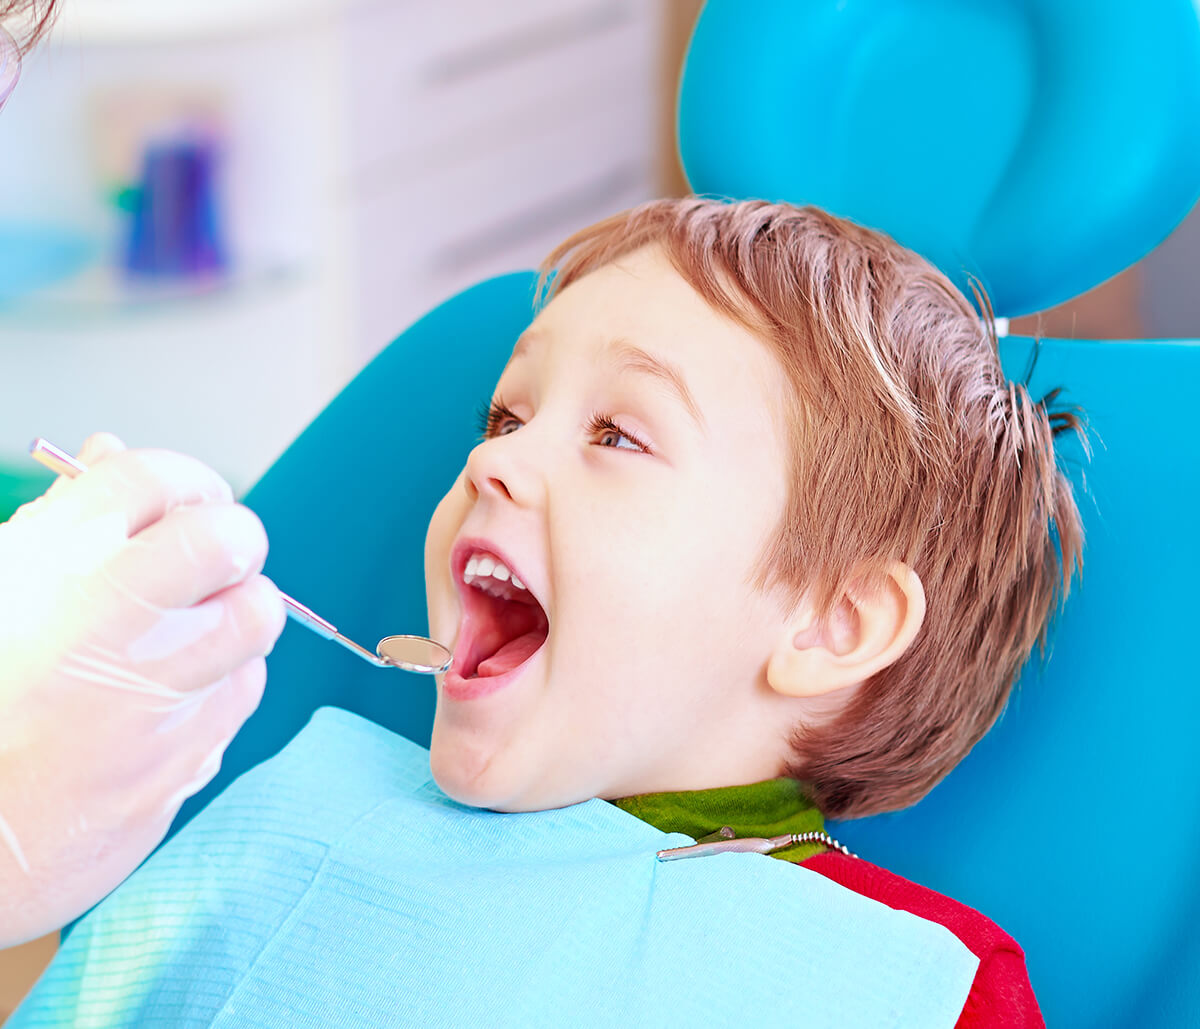 The Best Dental Clinics In New York City For Kids